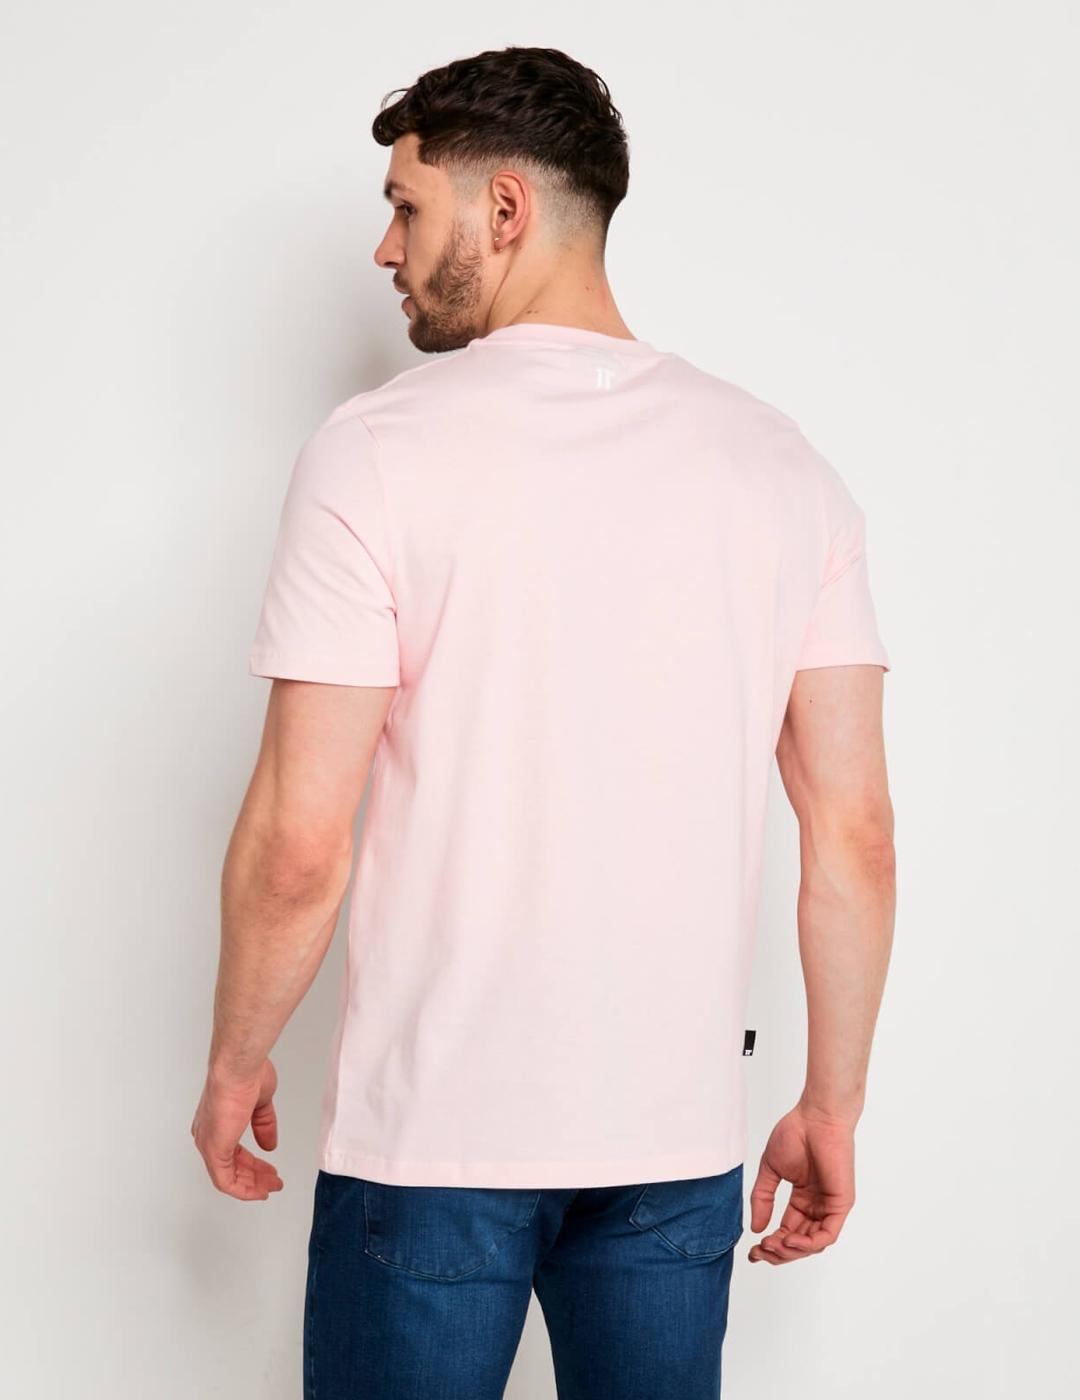 Camiseta 11 DEGREES CORE - Light Pink